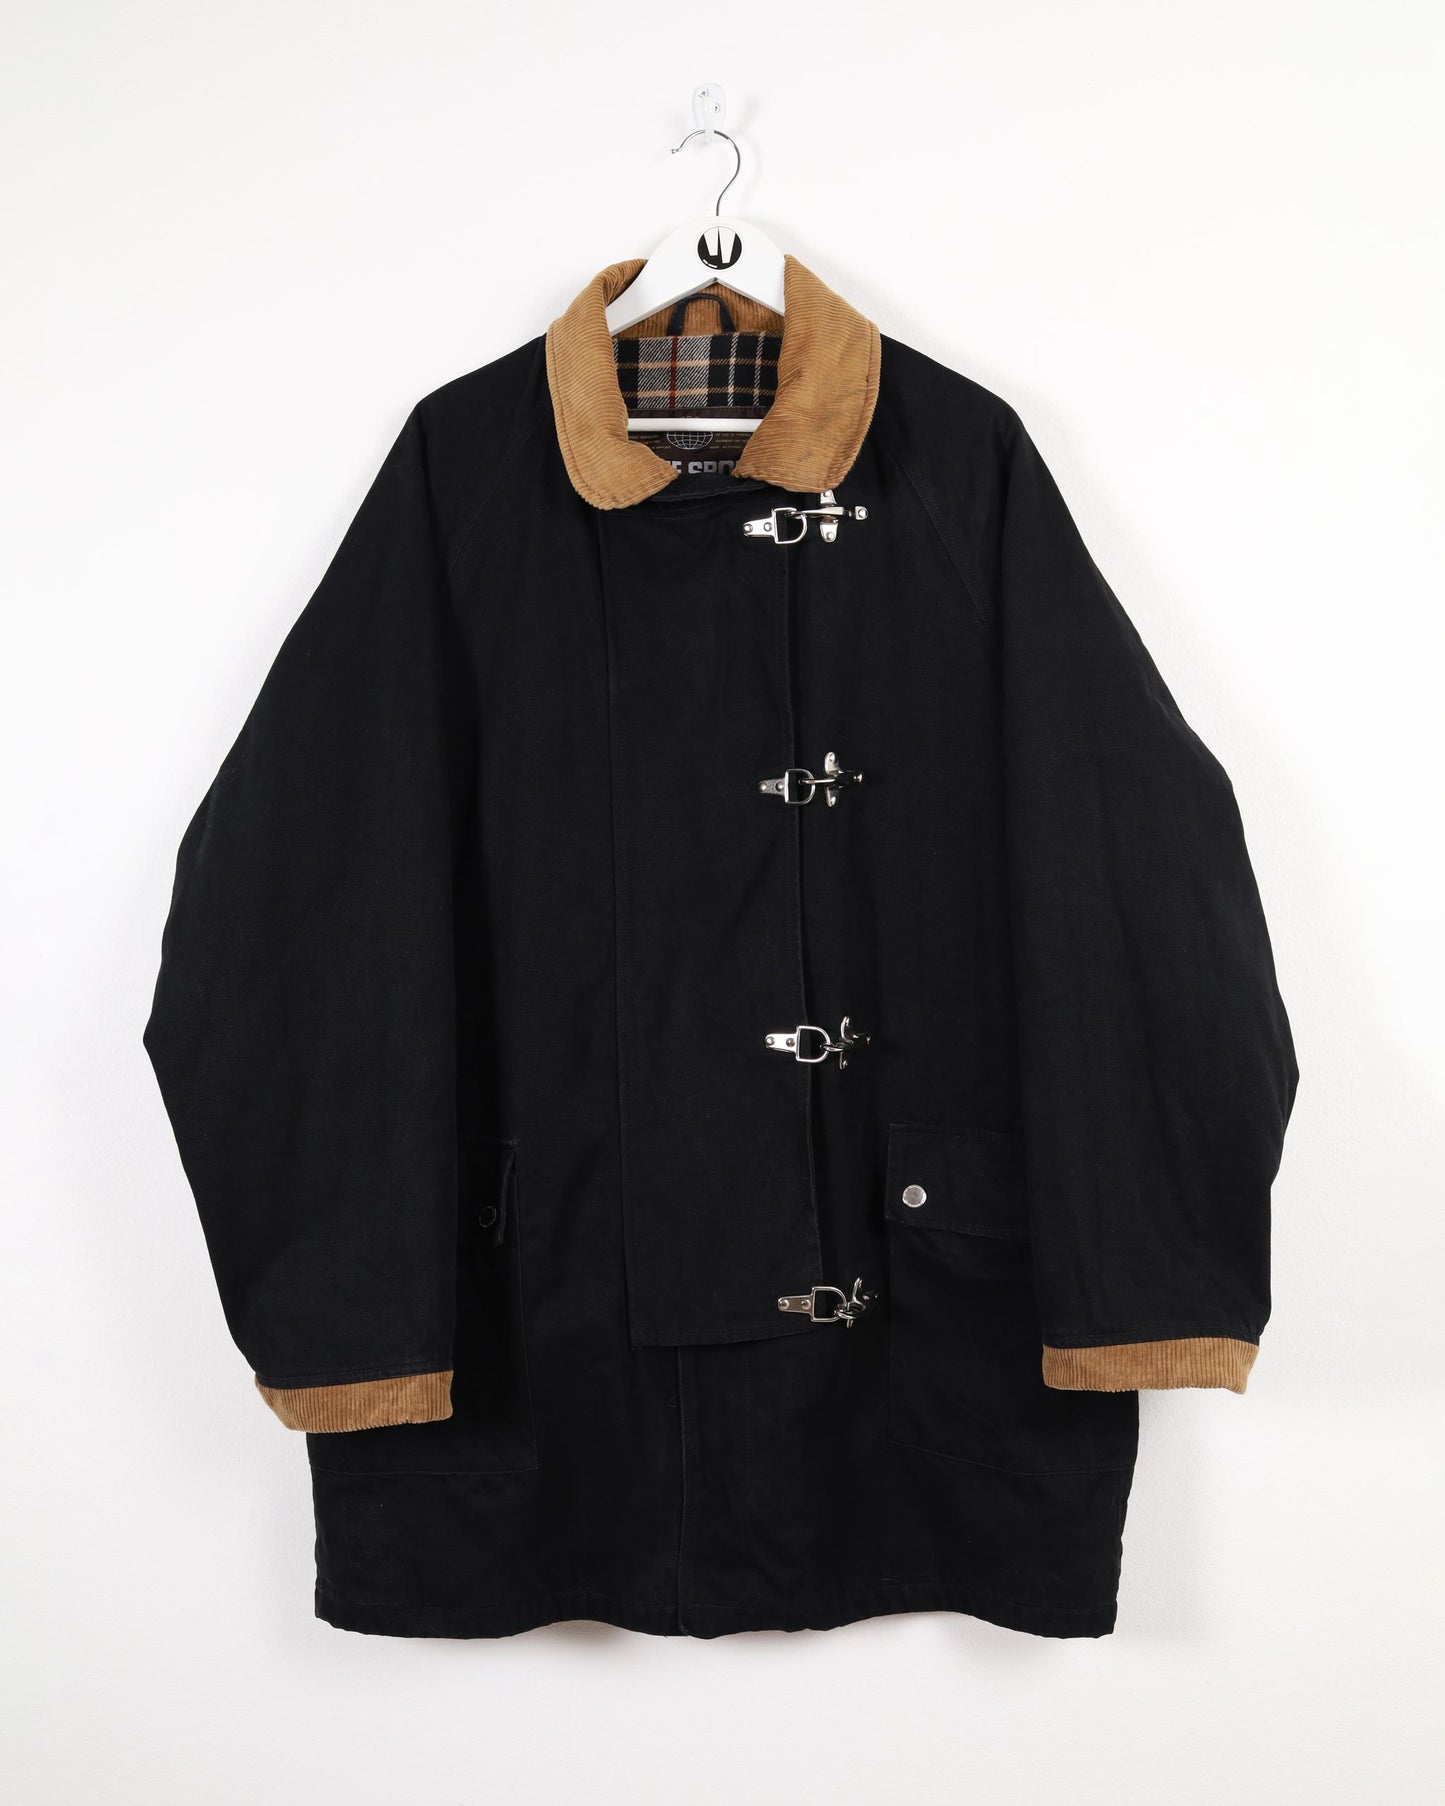 O’Kief Sport Buckle Jacket with Corduroy Neck Flaps and Sleeve, Black XL